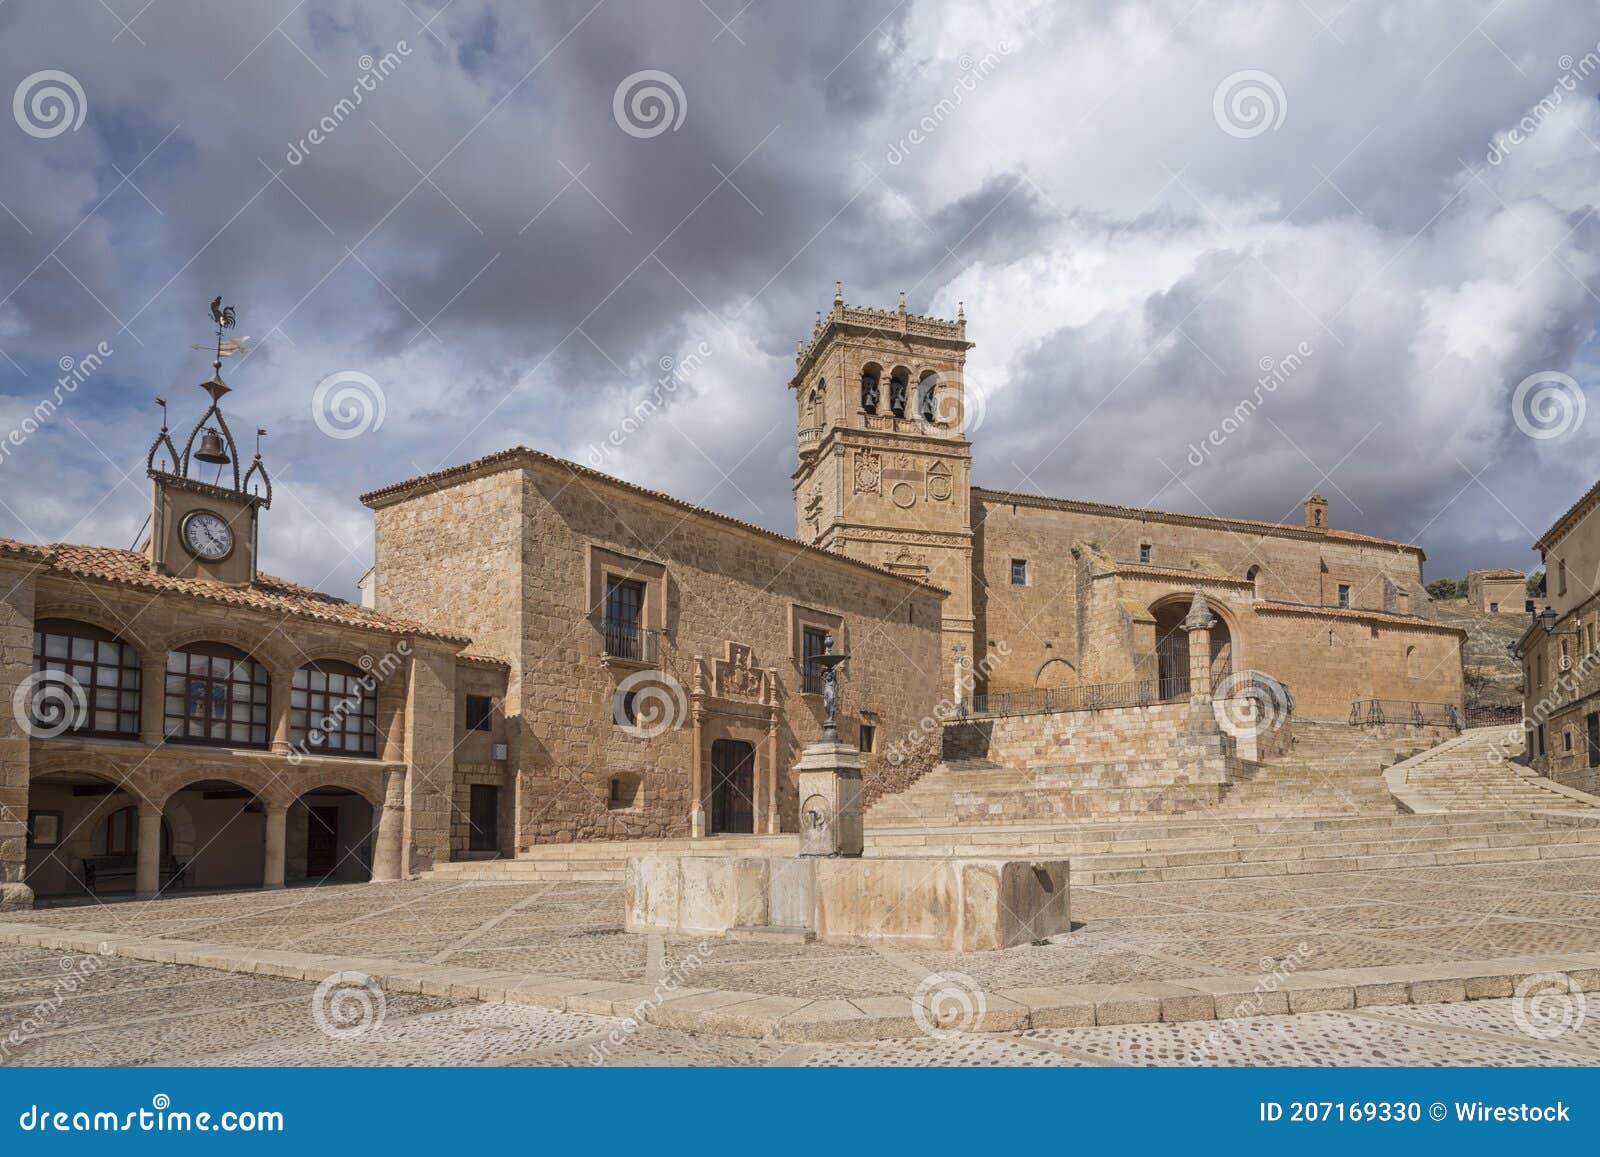 beautiful shot of the  moron de almazan municipality in soria, castile and leon, spain